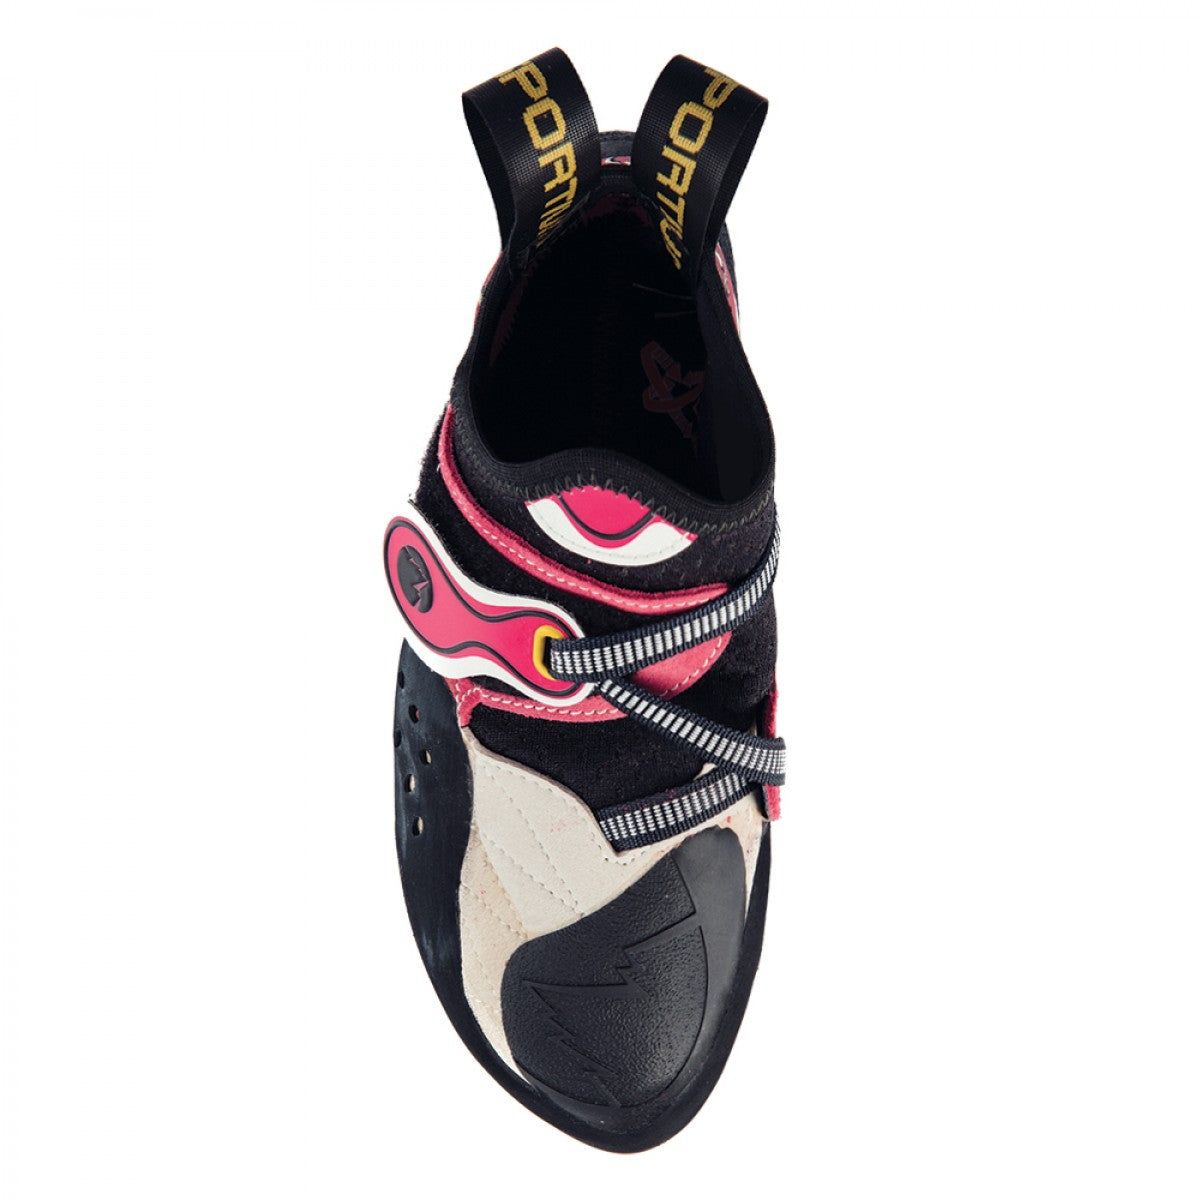 Item 496703 - La Sportiva Solution - Women's Climbing Shoes 